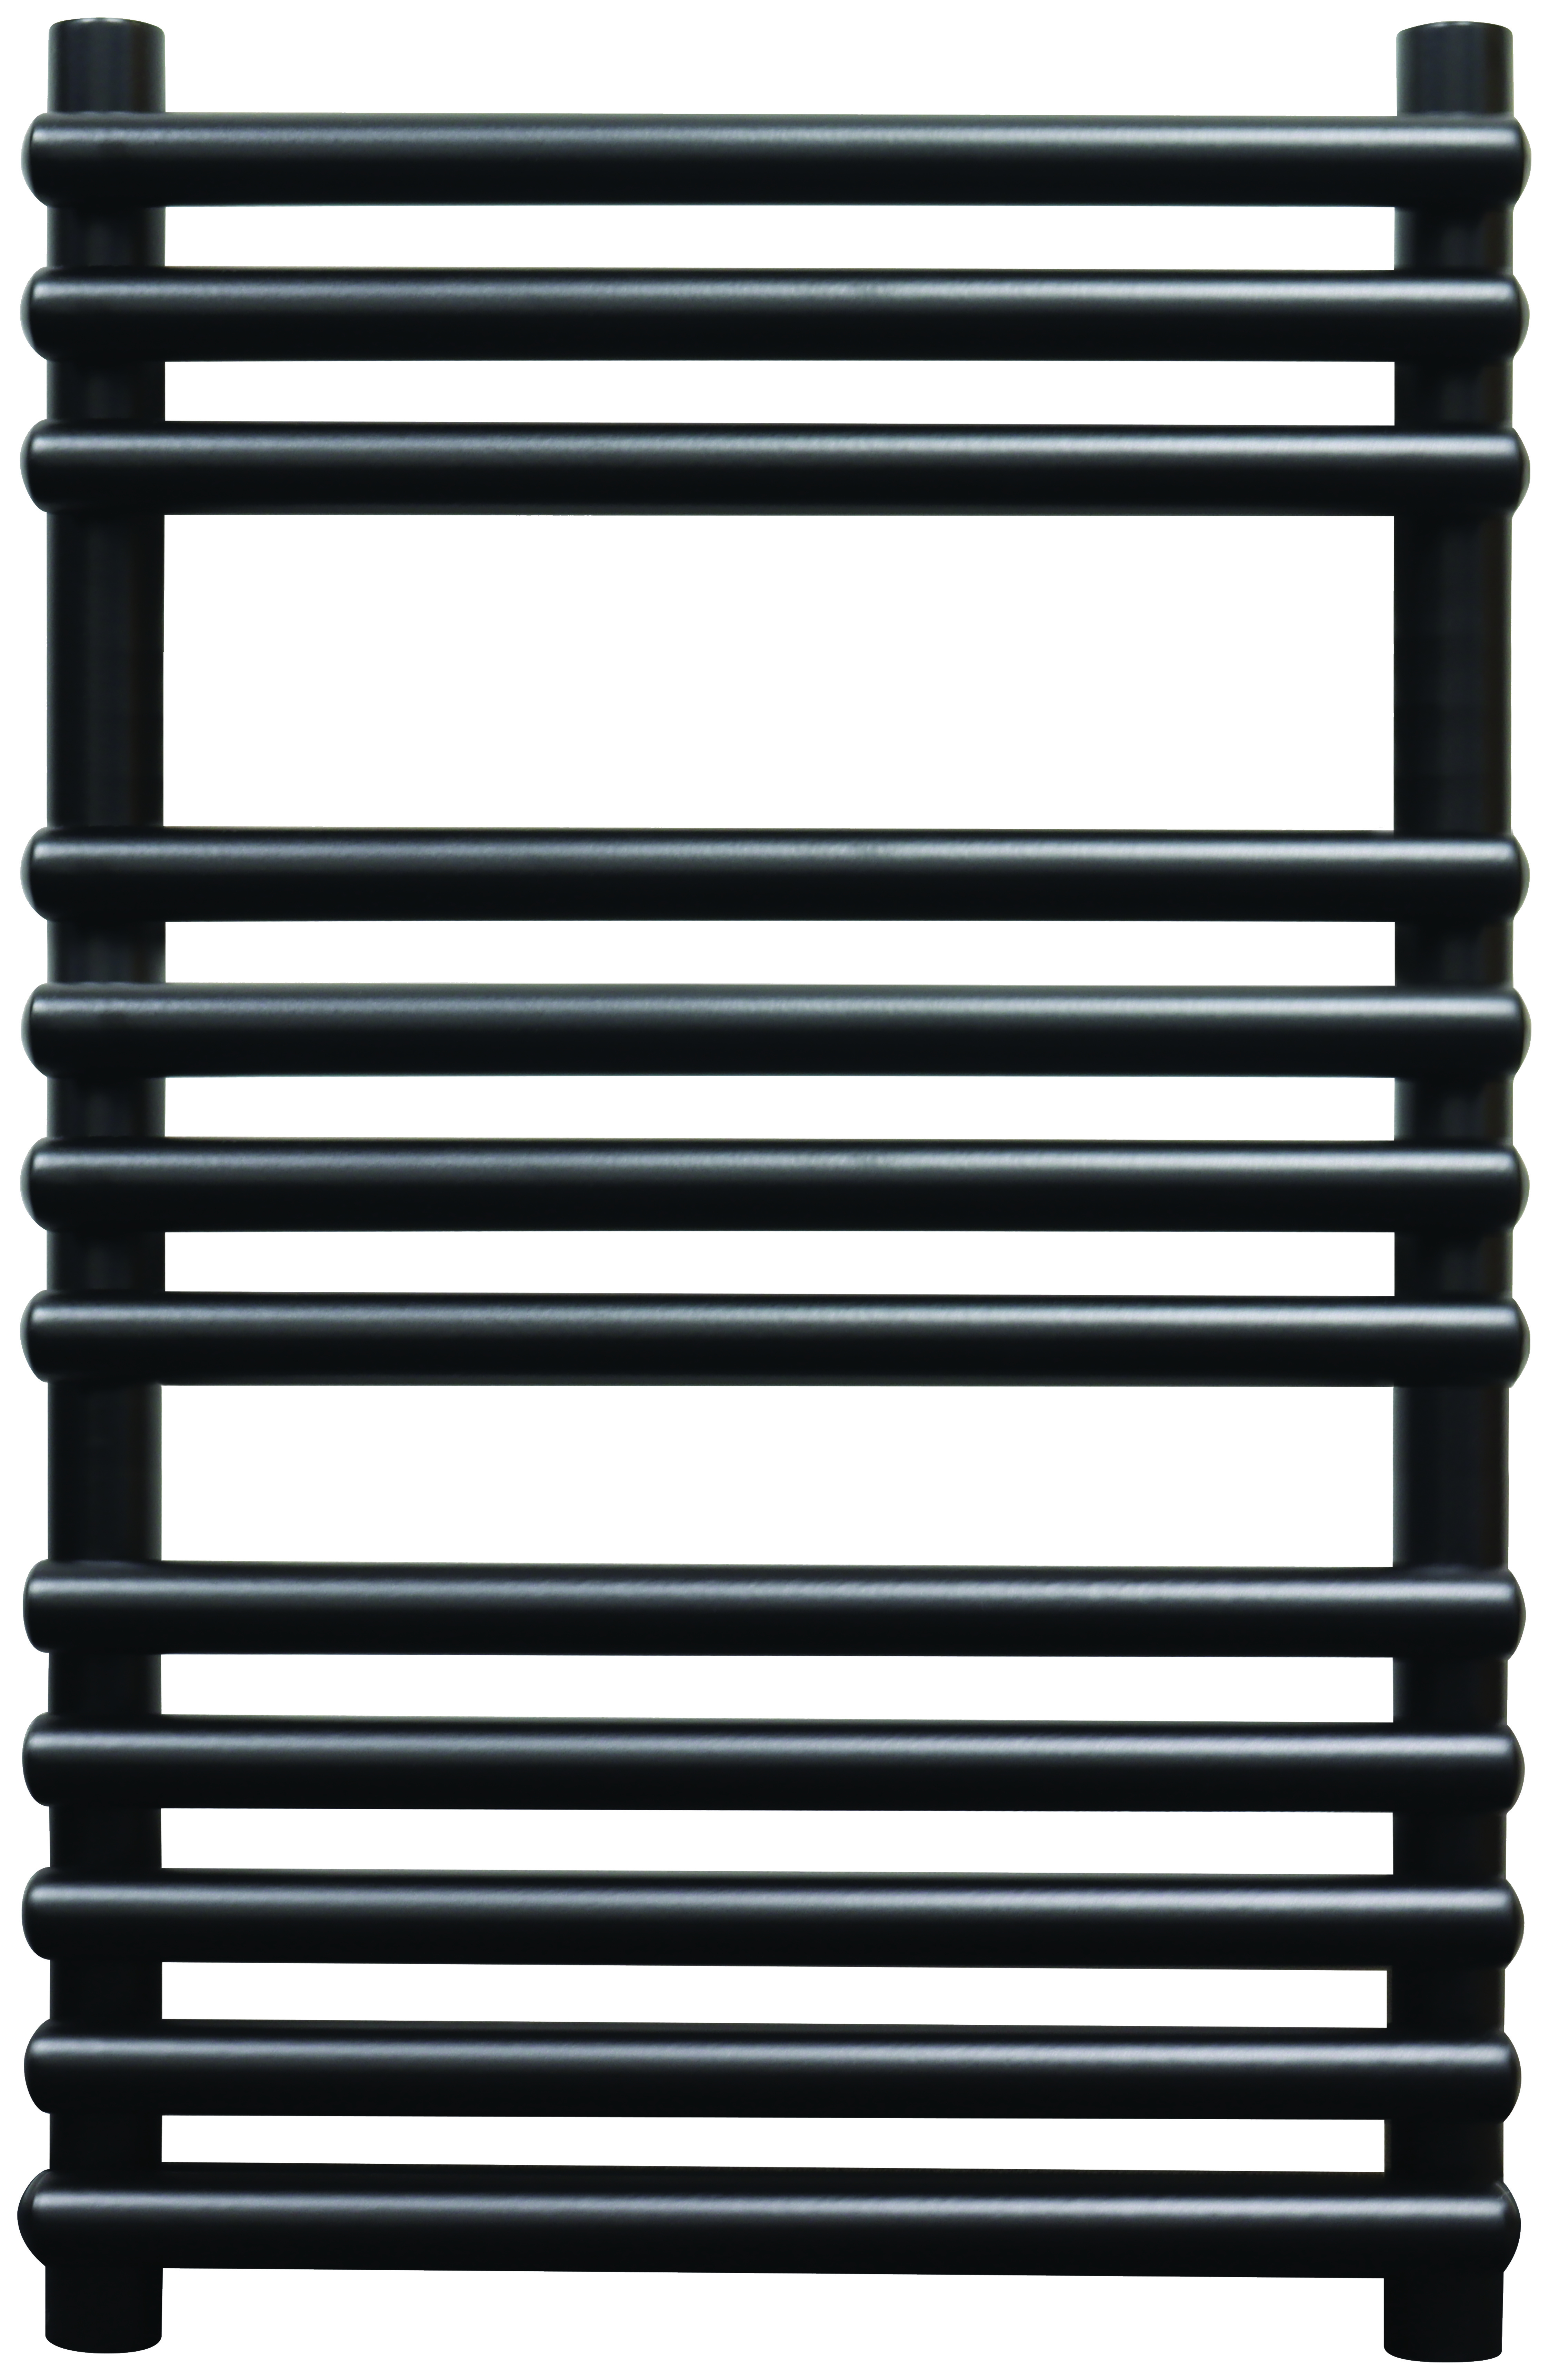 Image of Towelrads Double Iridio Matt Black Towel Radiator - 1200 x 500mm